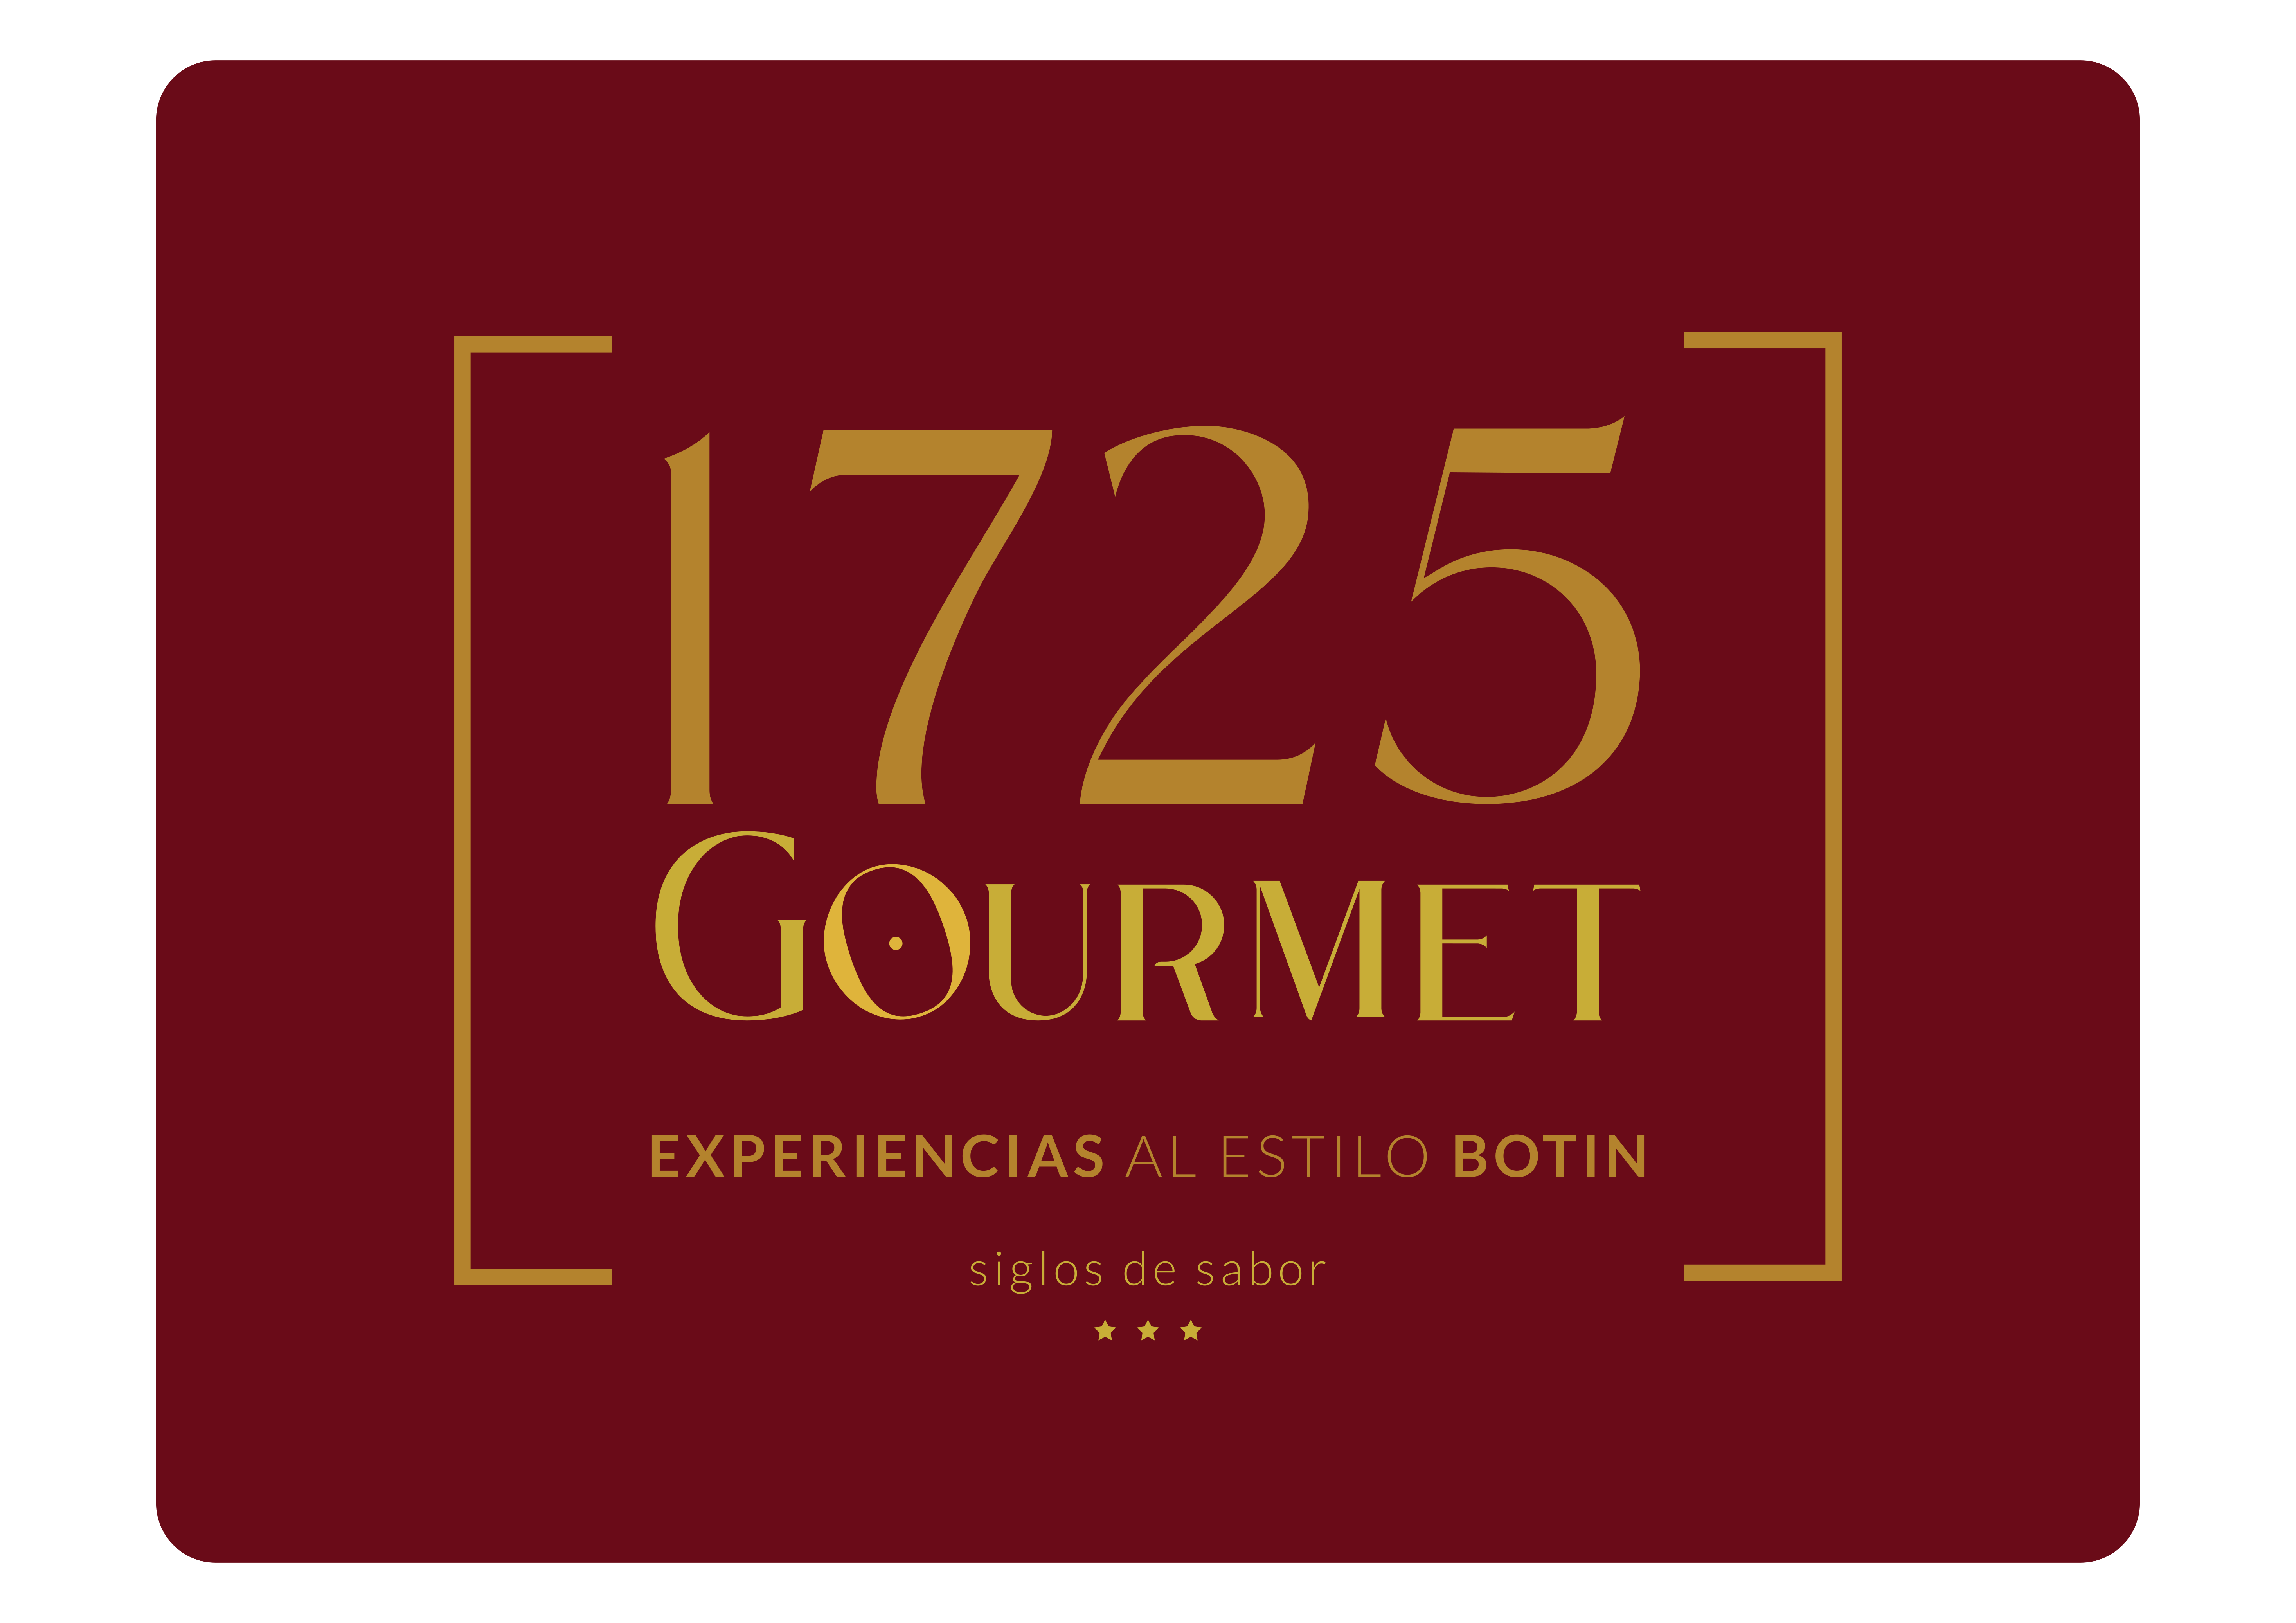 Logo_1725_gourmet